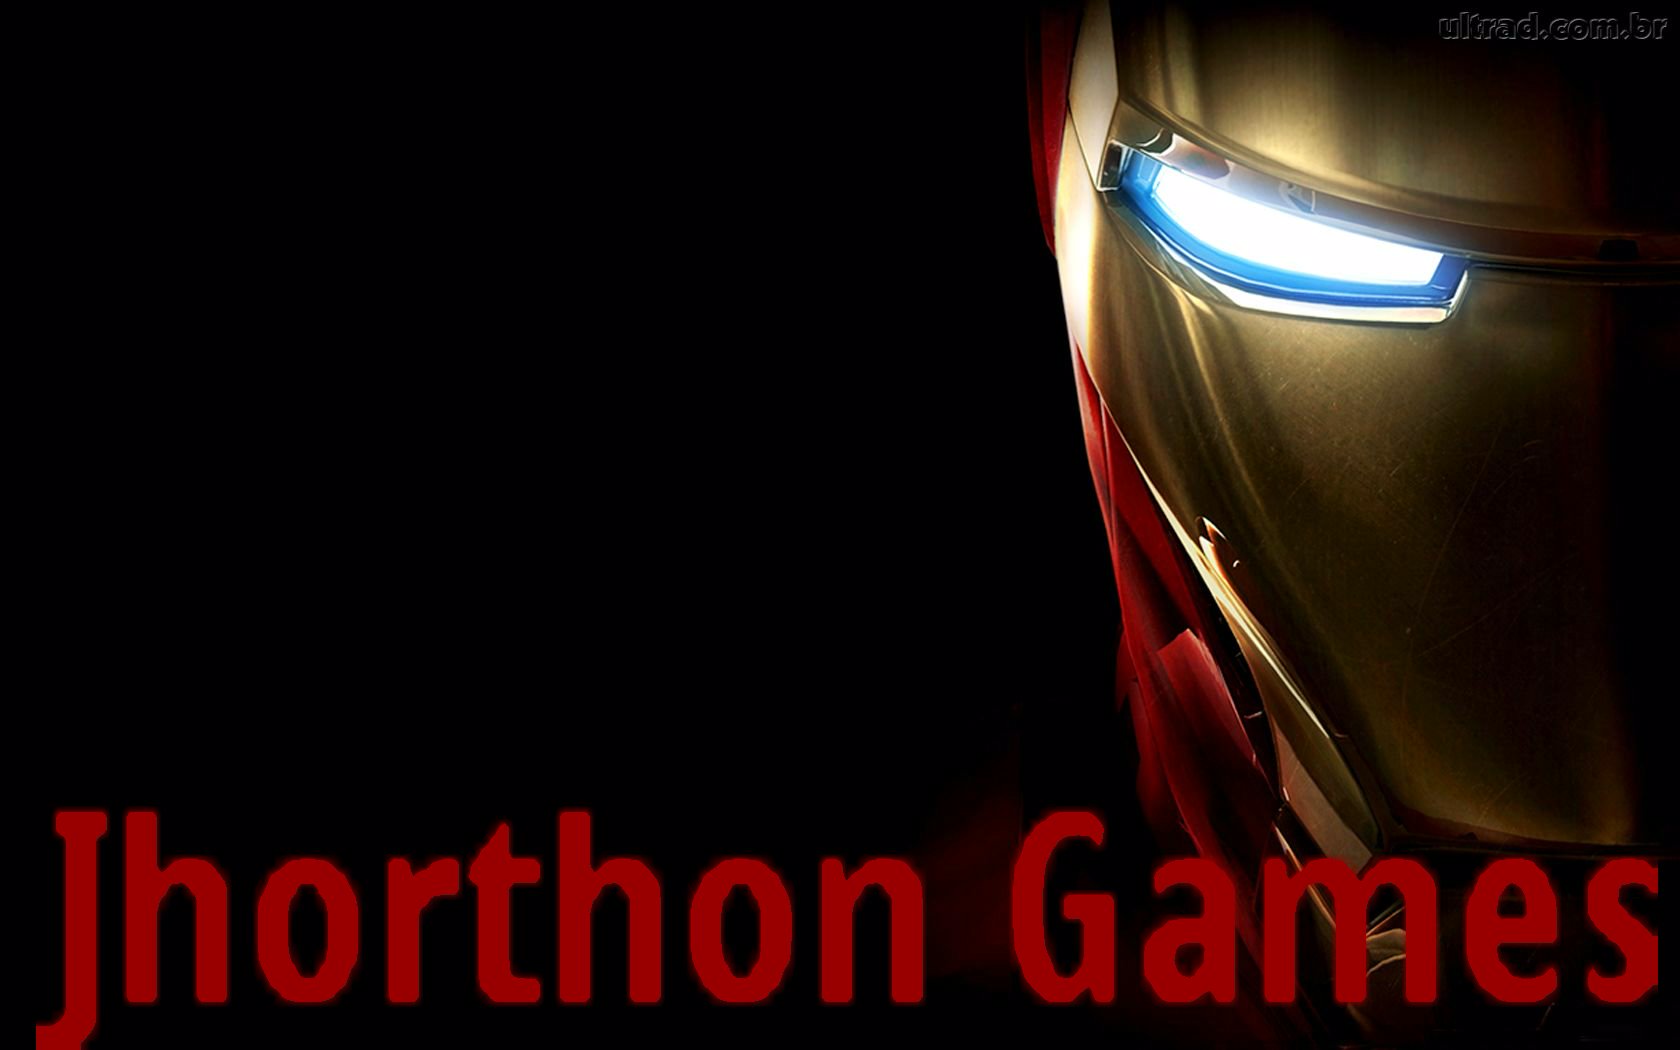 Jhorthon Games